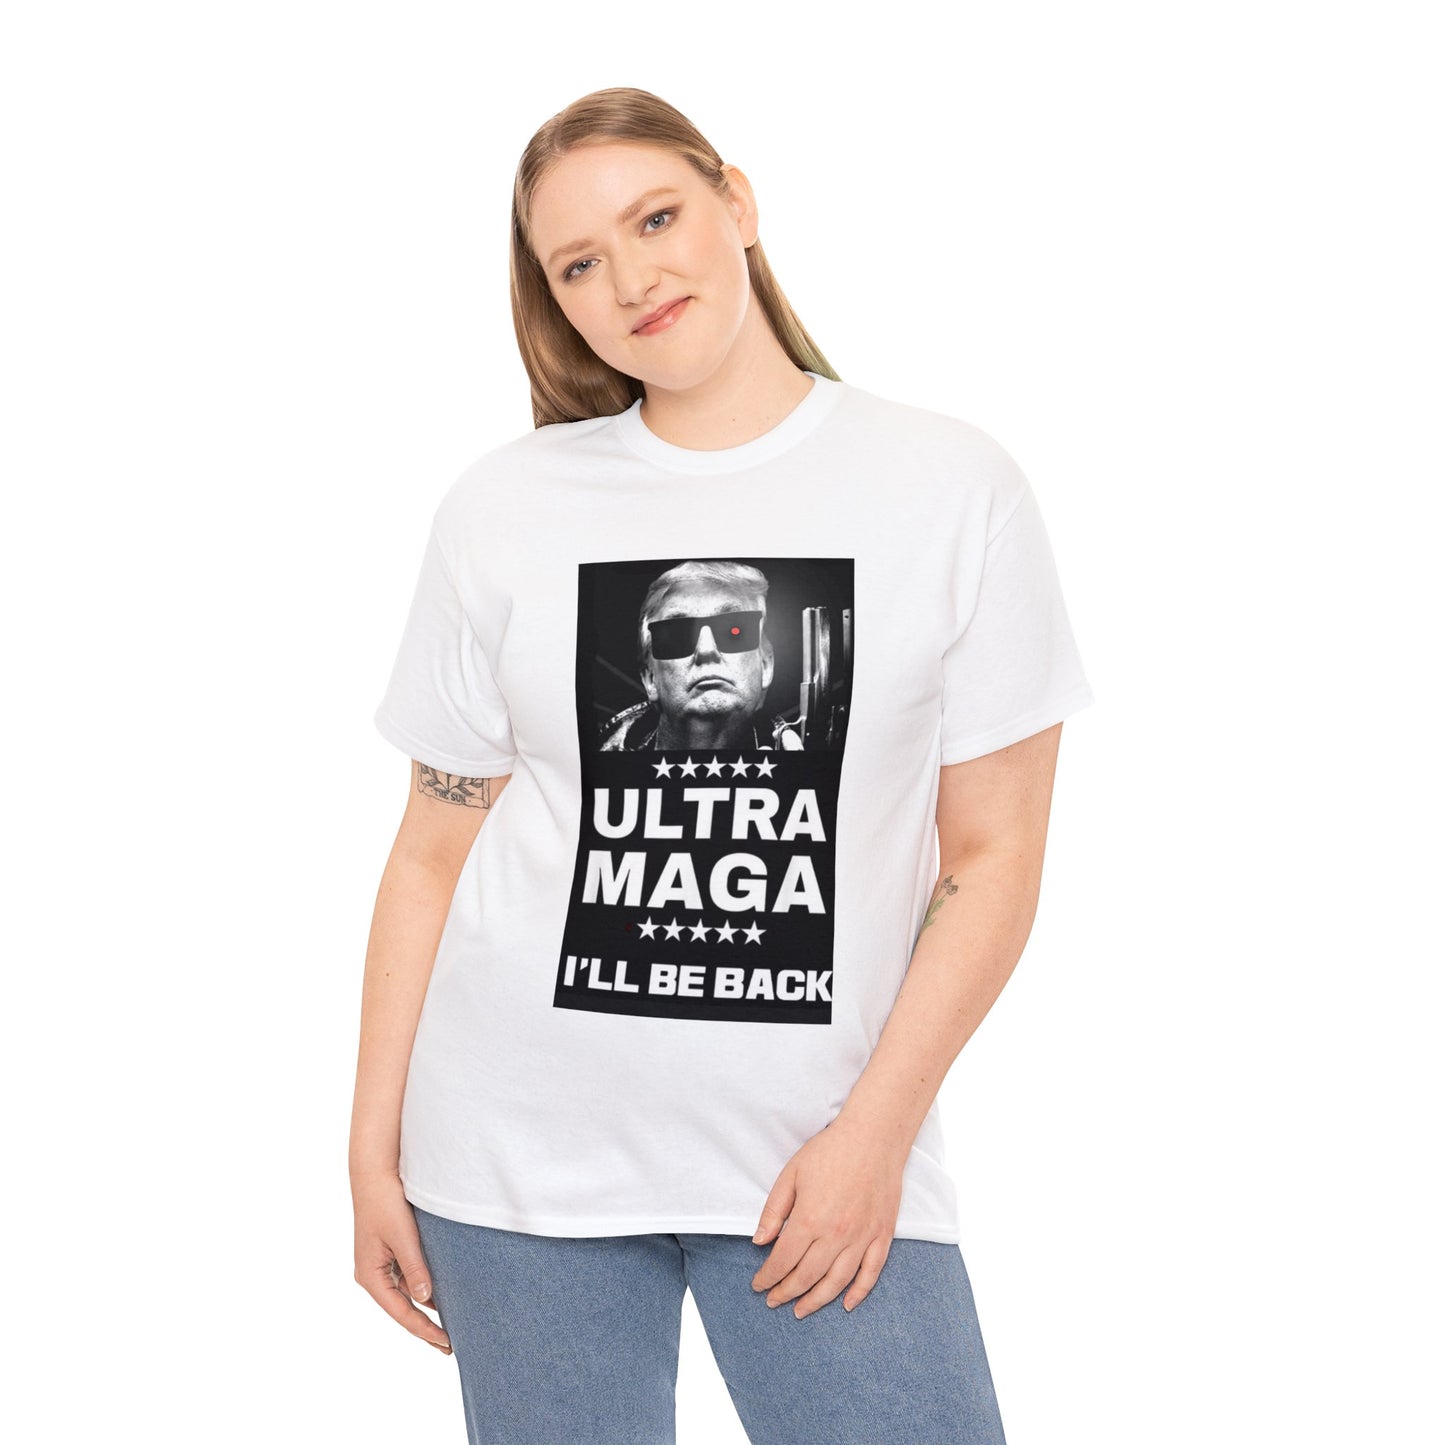 Trumpinator T-Shirt Funny Trump Merch and Trump Shirts